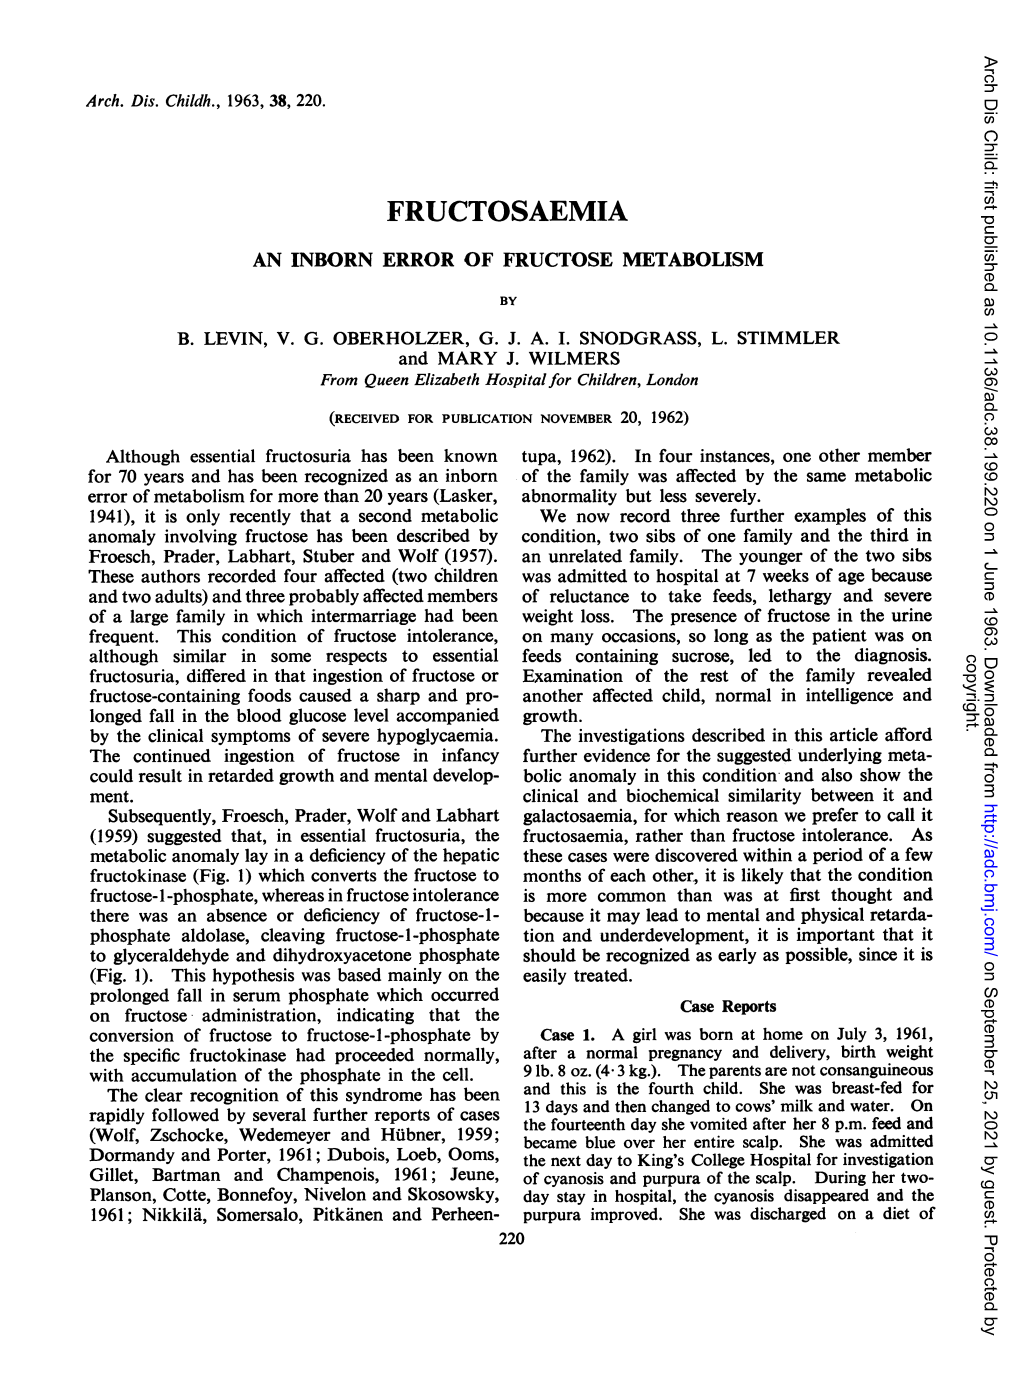 Fructosaemia an Inborn Error of Fructose Metabolism